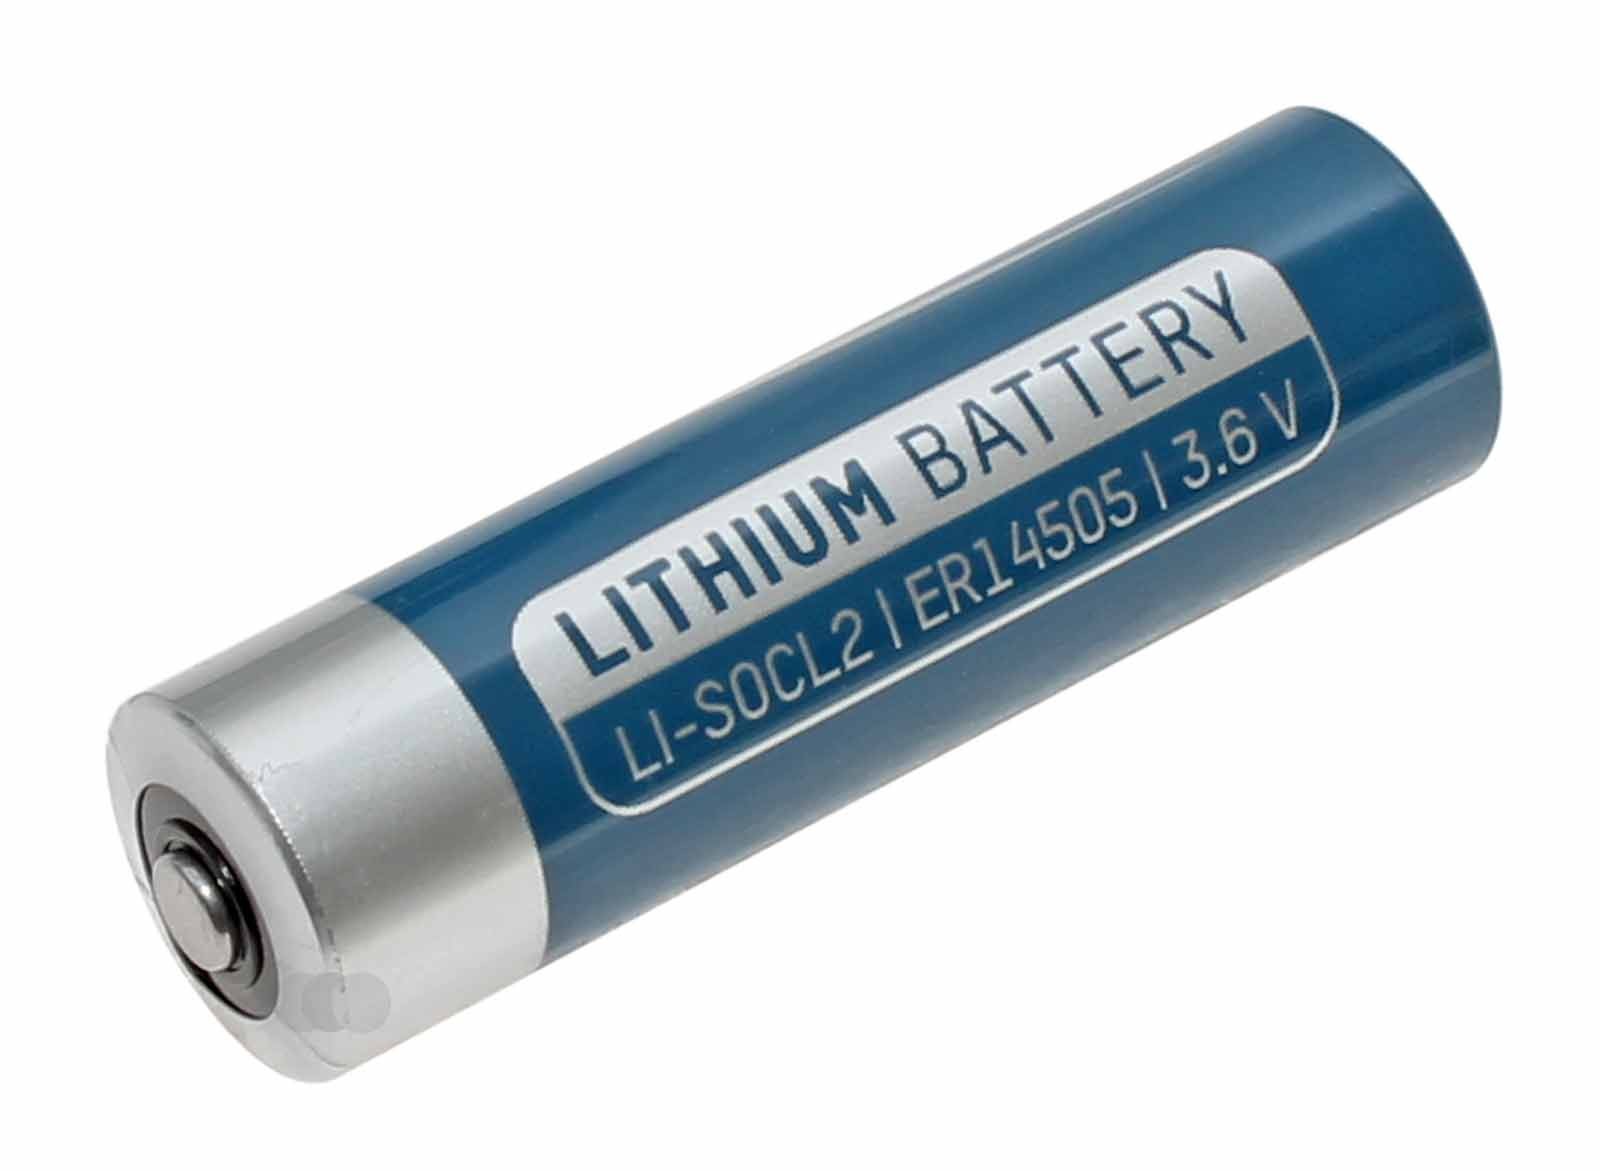 Ansmann 14505 Lithium Batterie, AA, Mignon, LR06, 3,6V, 2400mAh